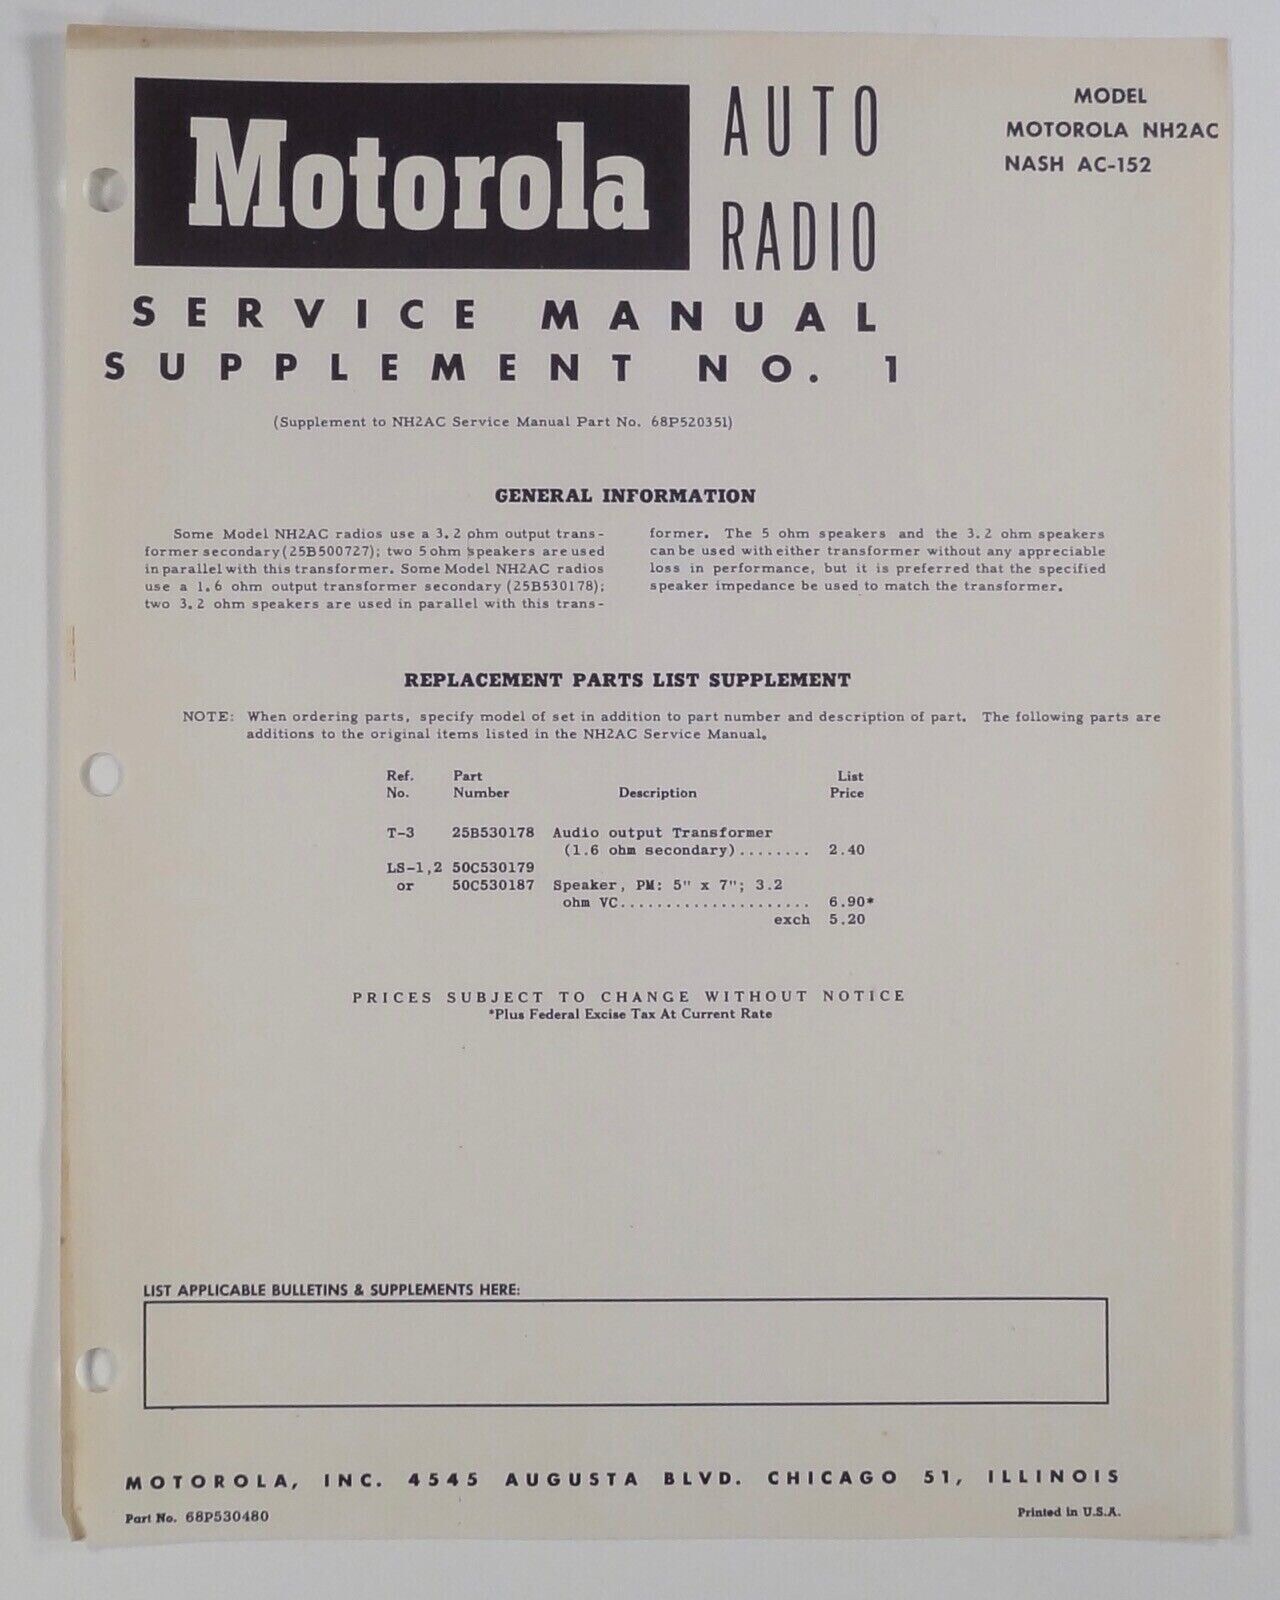 1950s MOTOROLA AUTO RADIO SERVICE MANUAL # NH2AC/Nash AC-152 supplement 1 {A}